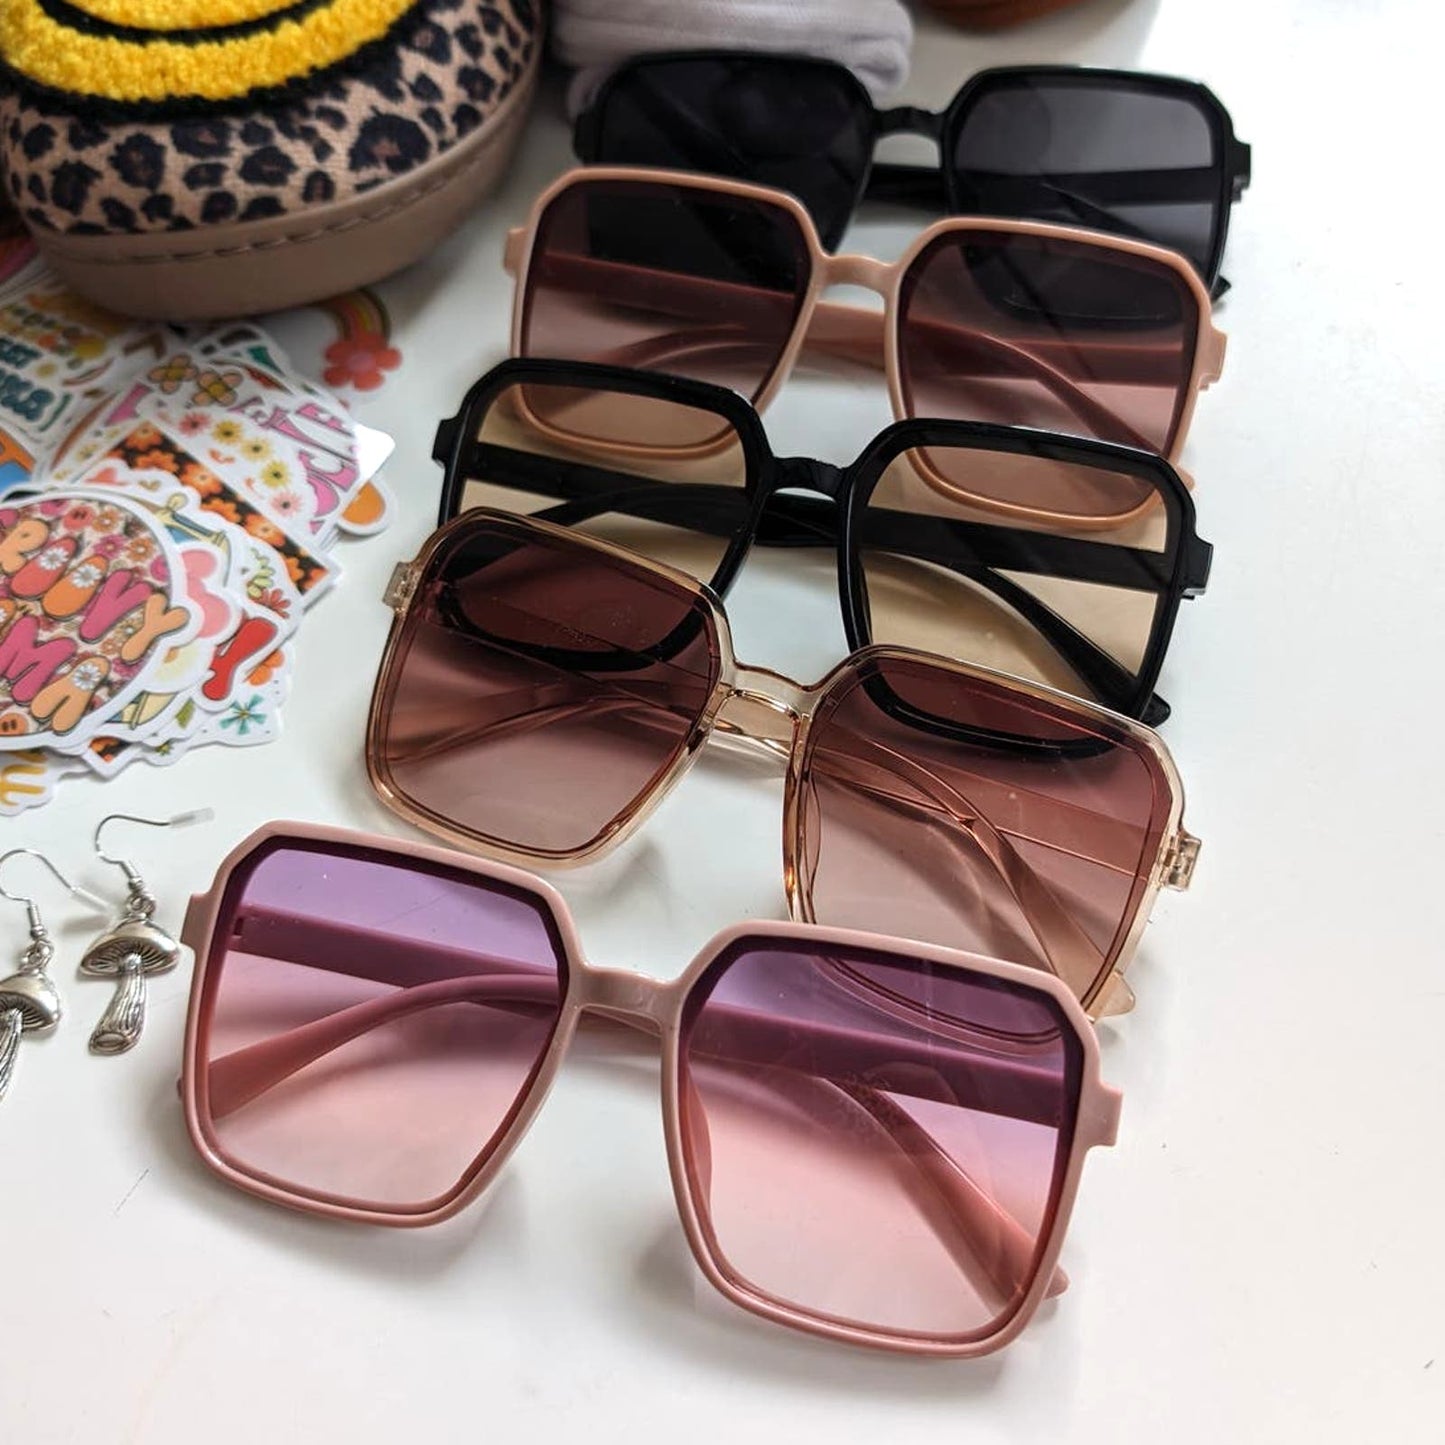 70s Retro Black Square Minimalist Festival Sunglasses Chic Tinted Sunnies Shades